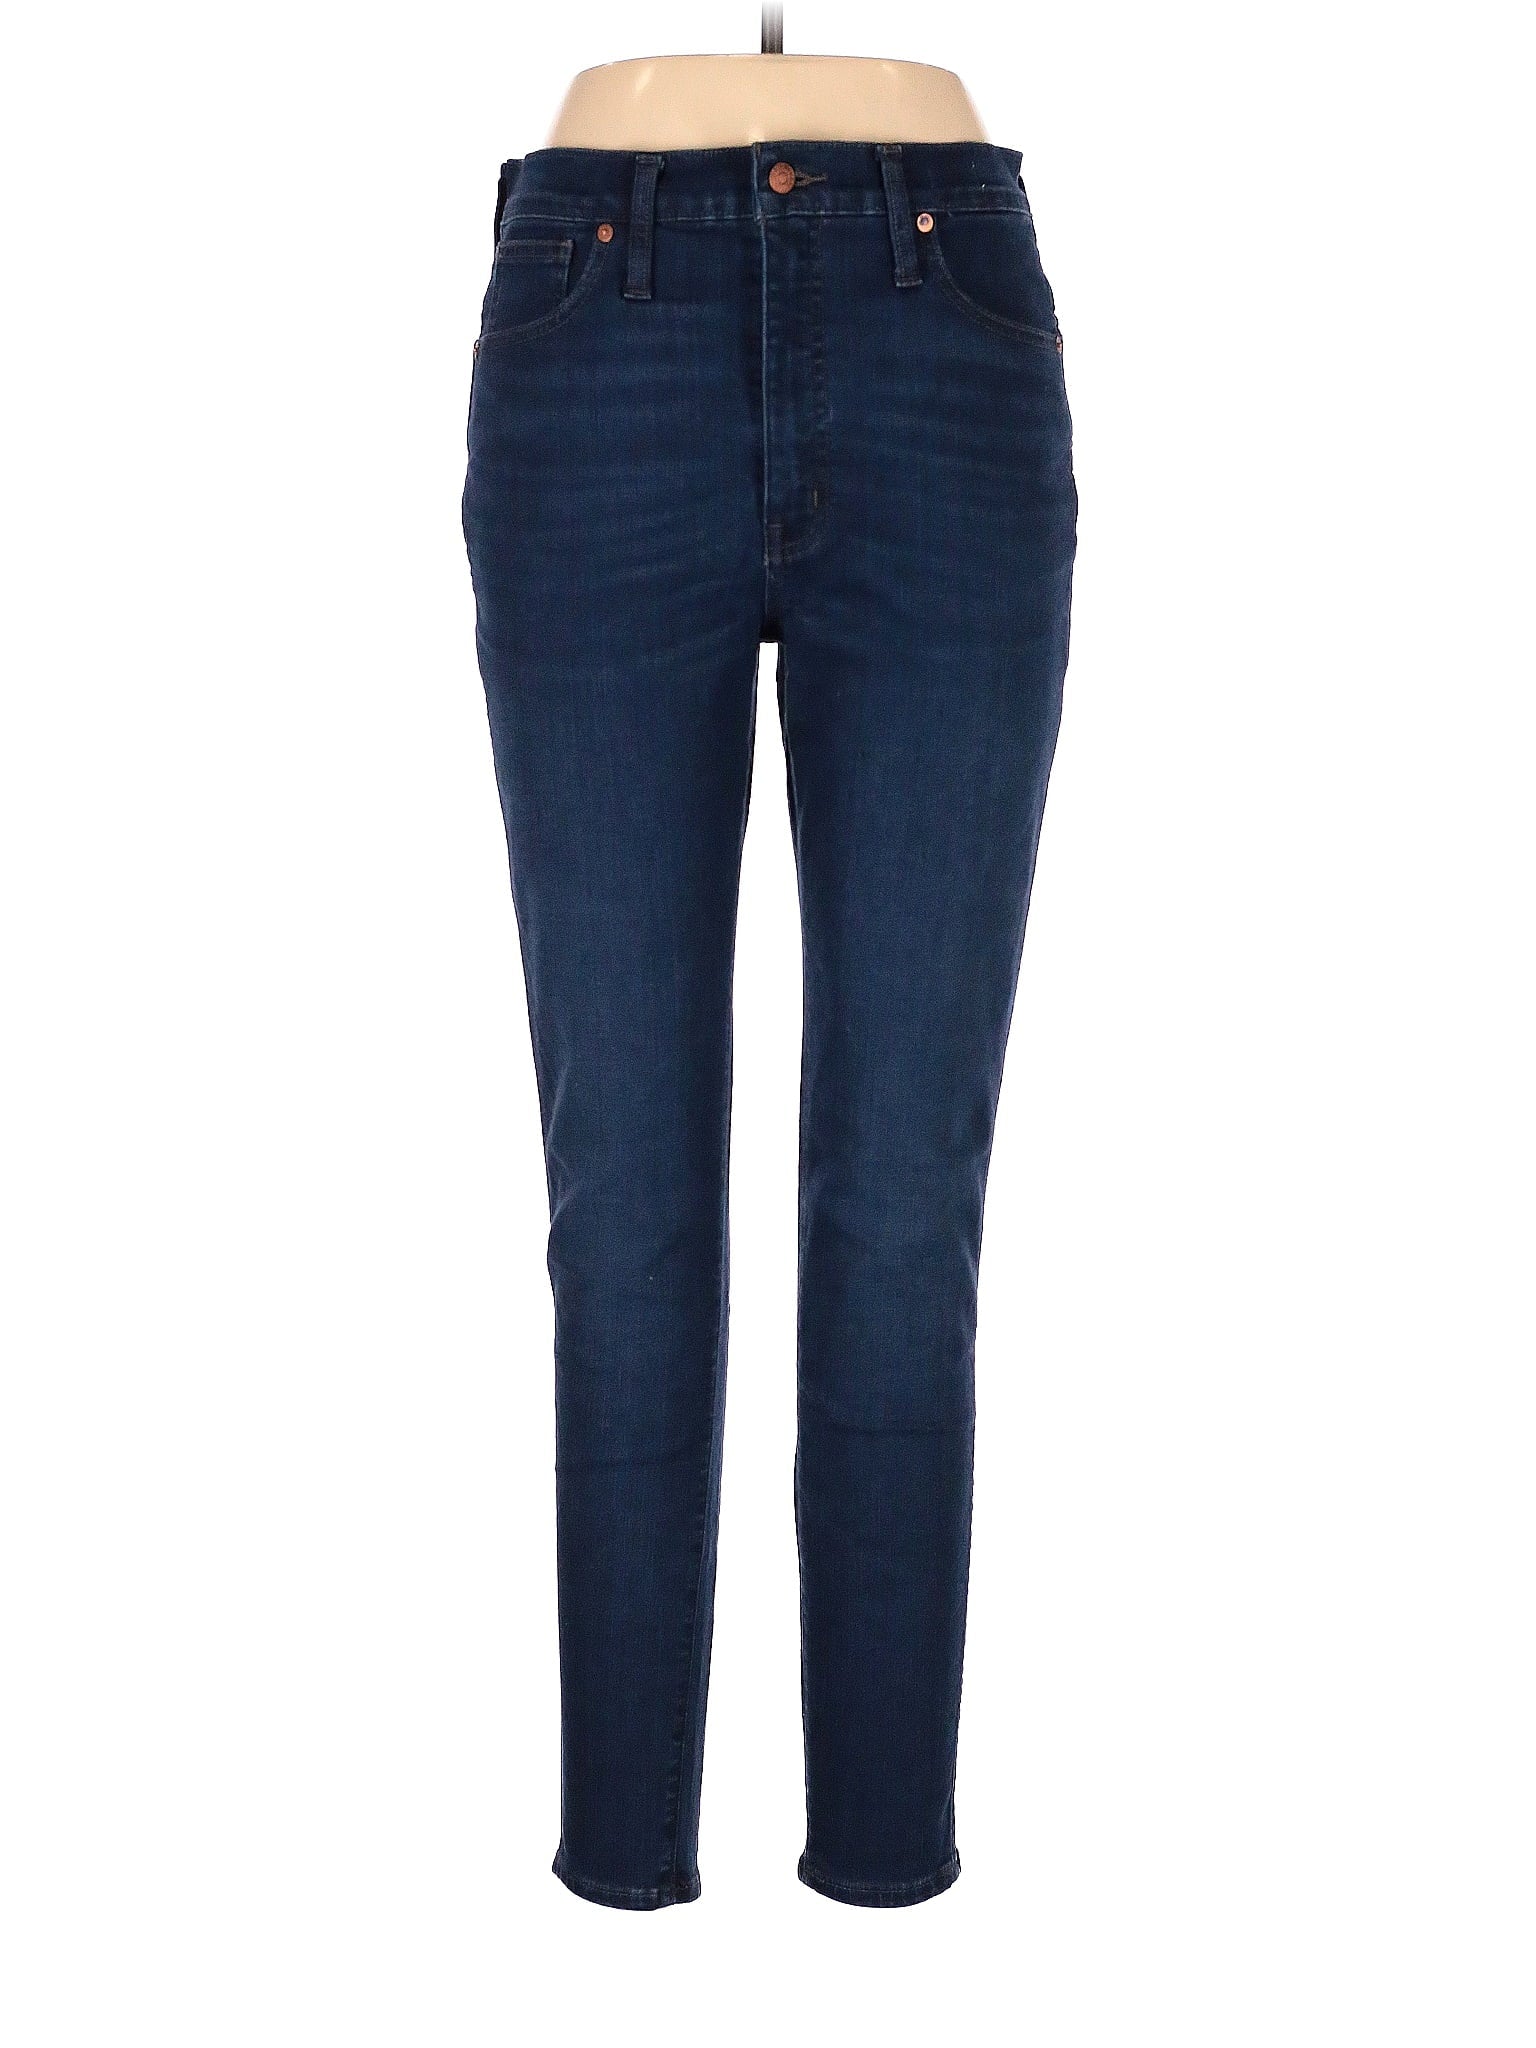 High-Rise Skinny Jeans in Dark Wash waist size - 30